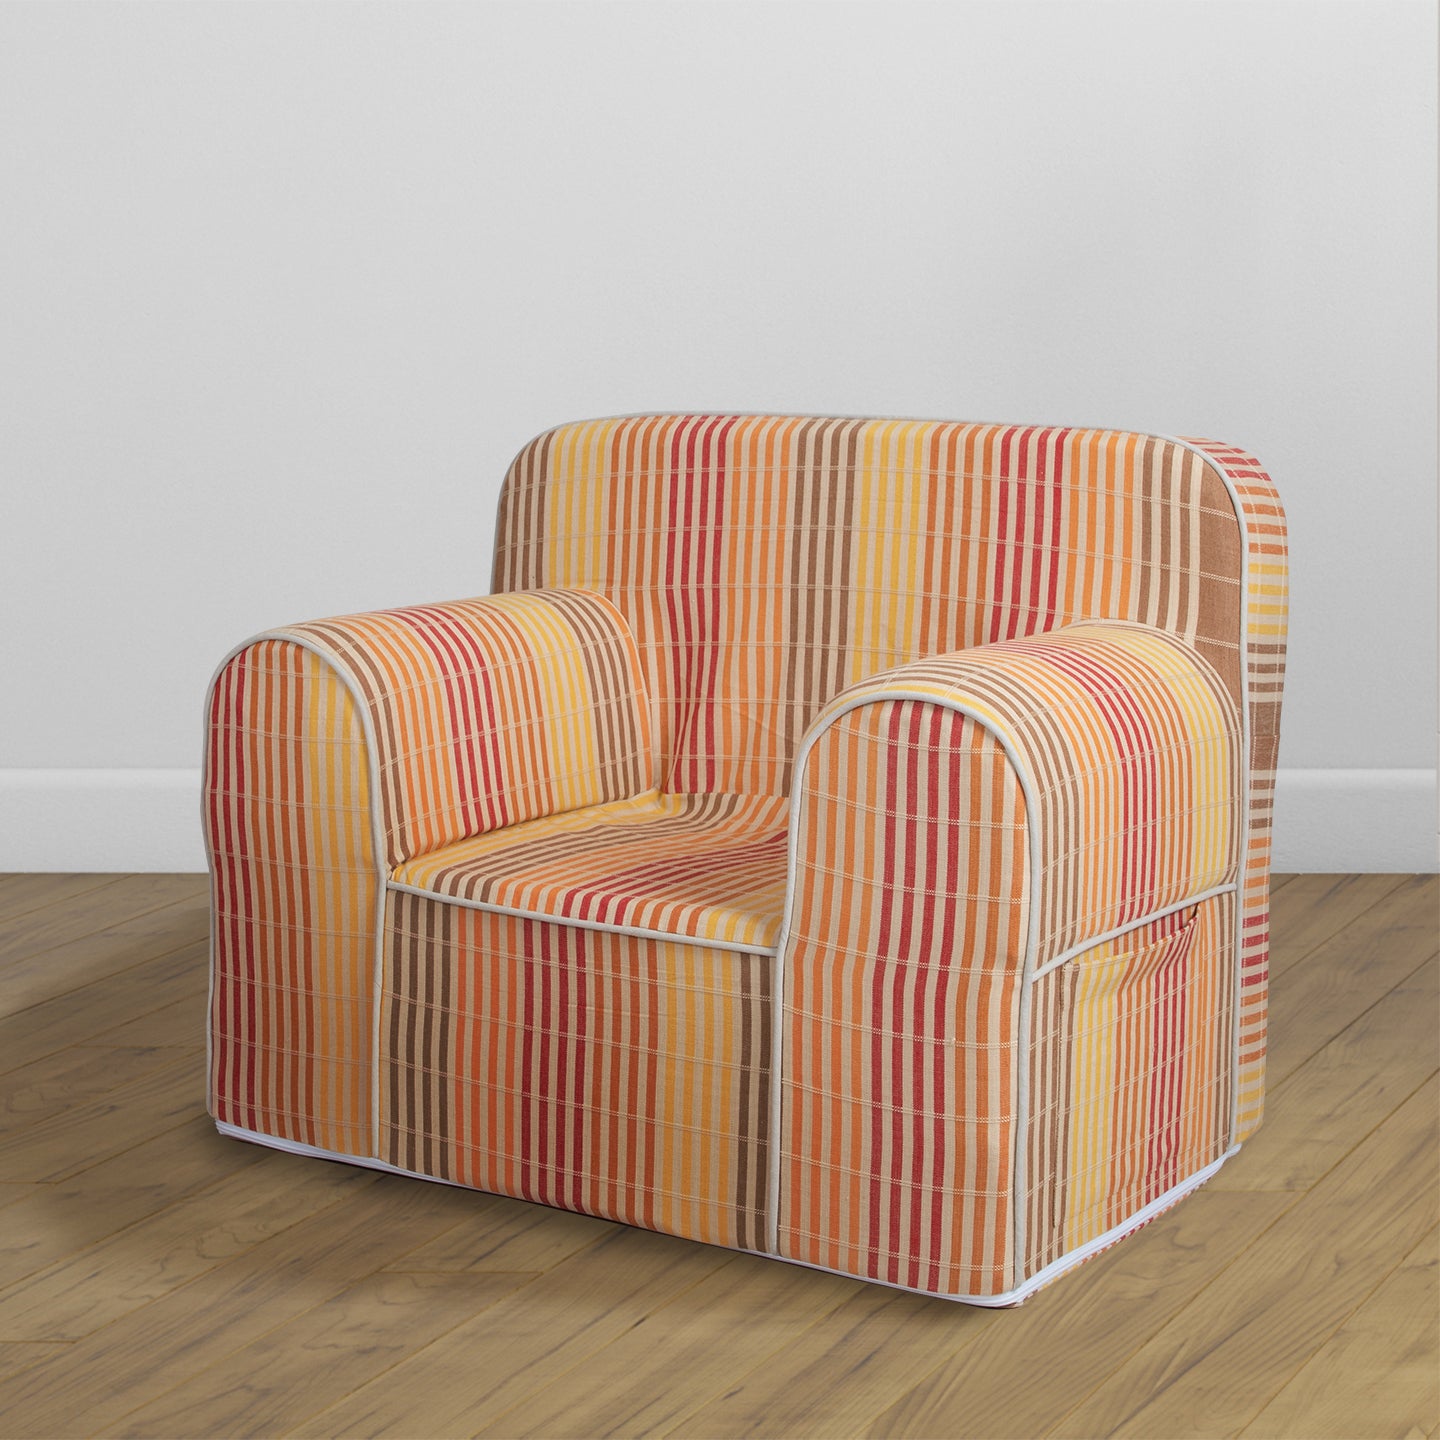 Role Play Comfy Sofa- Woven stripes terra